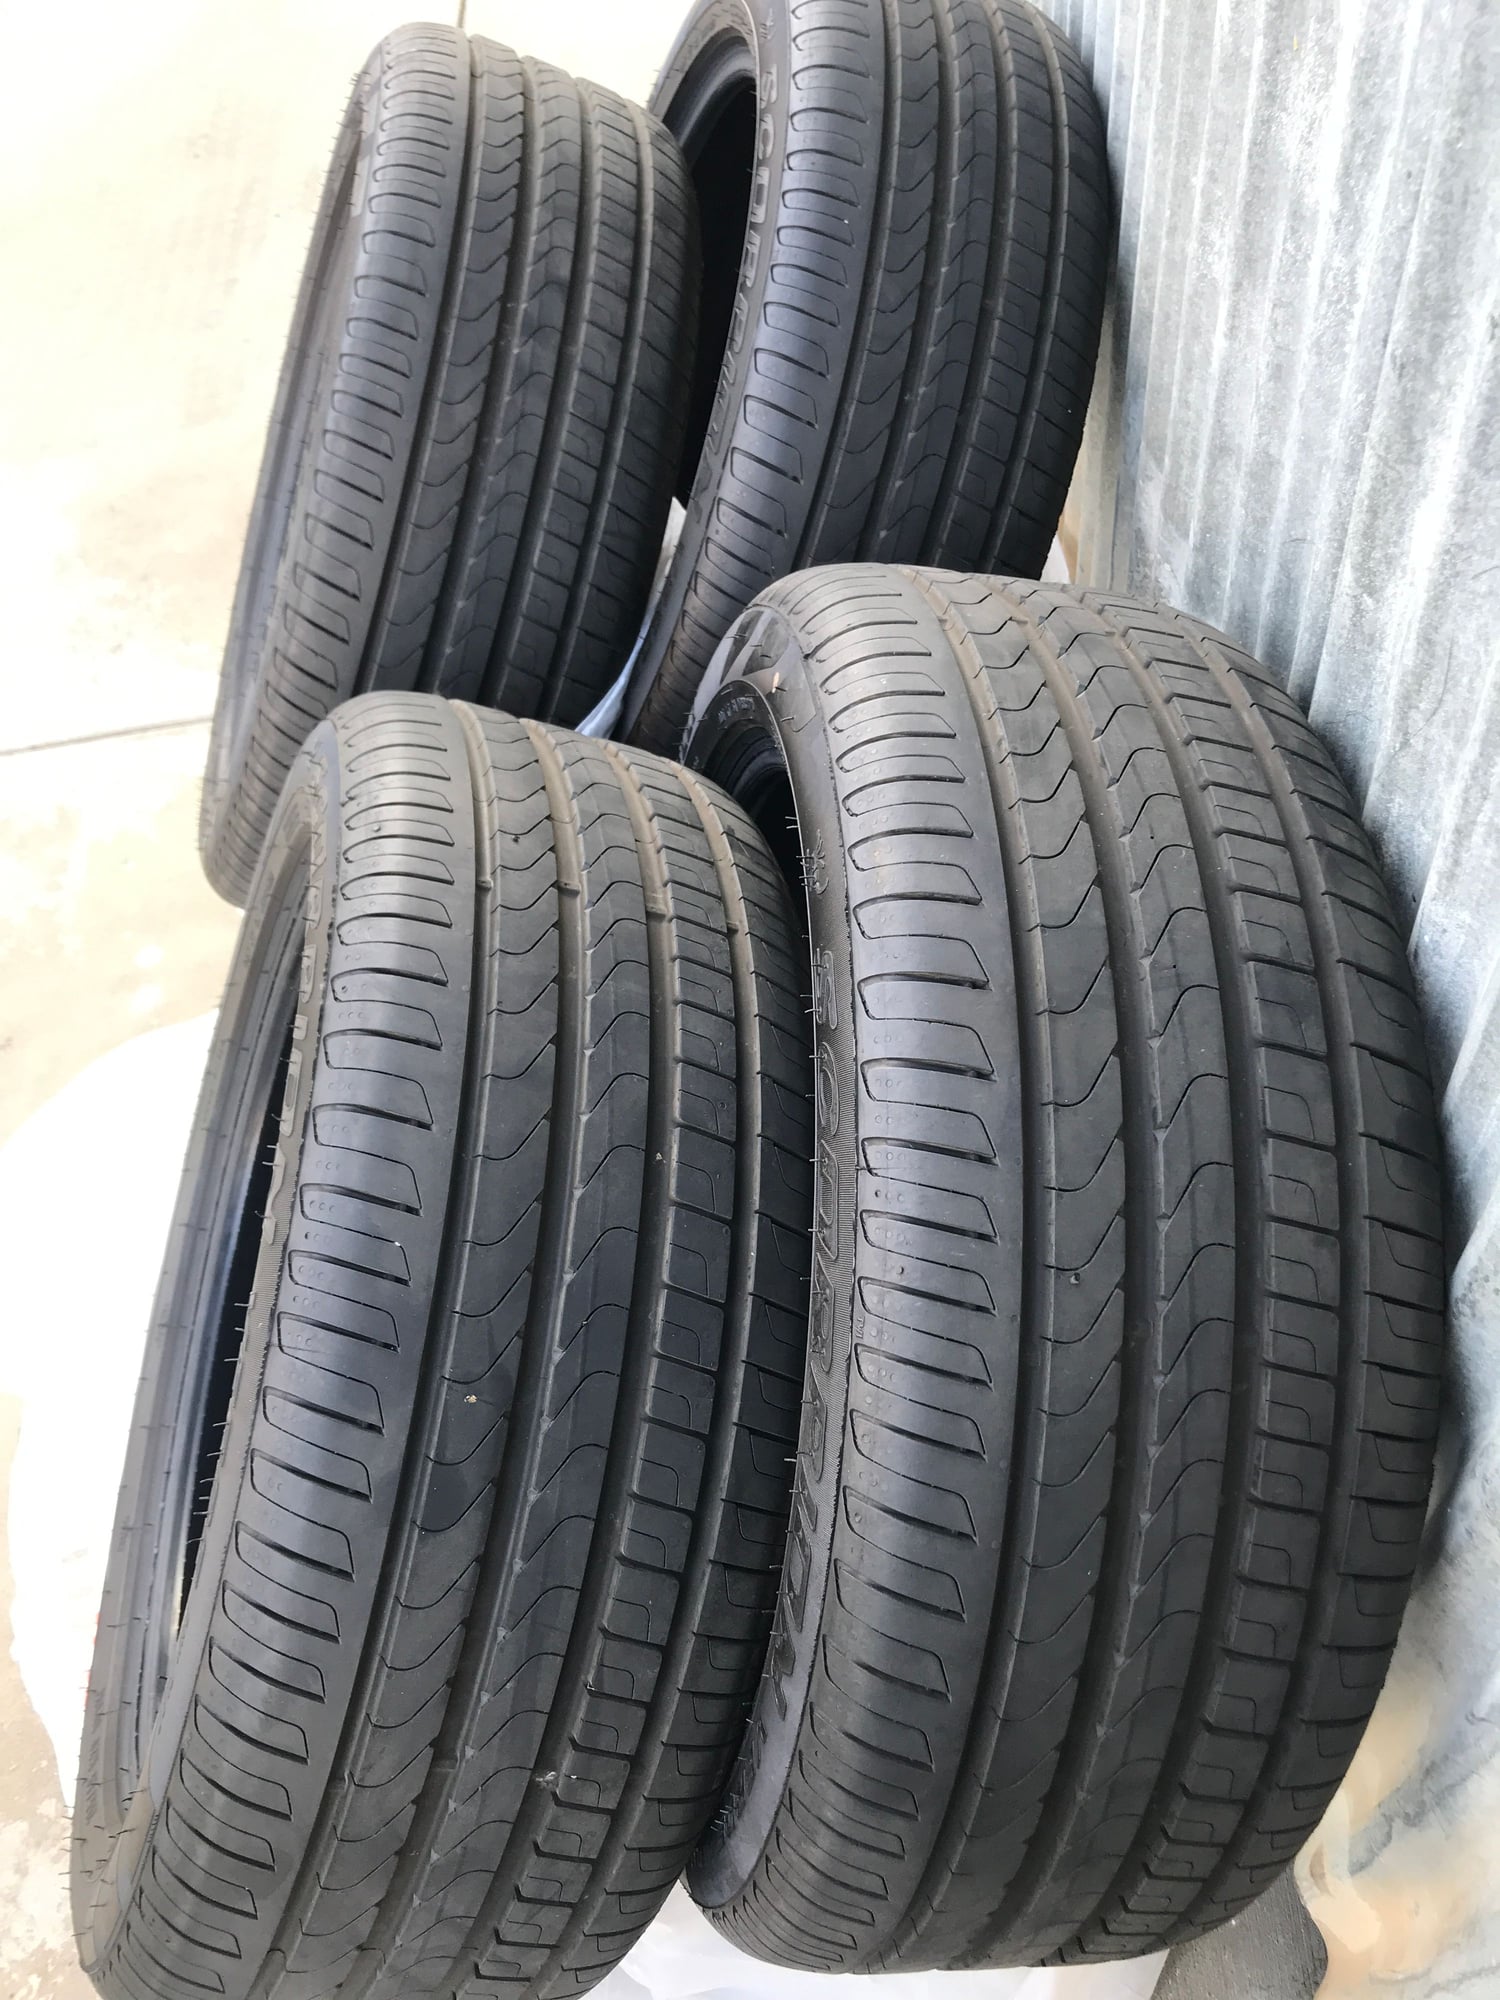 Wheels and Tires/Axles - Pirelli Scorpion Verde Run Flat - Used - 0  All Models - Bakersfield, CA 93309, United States